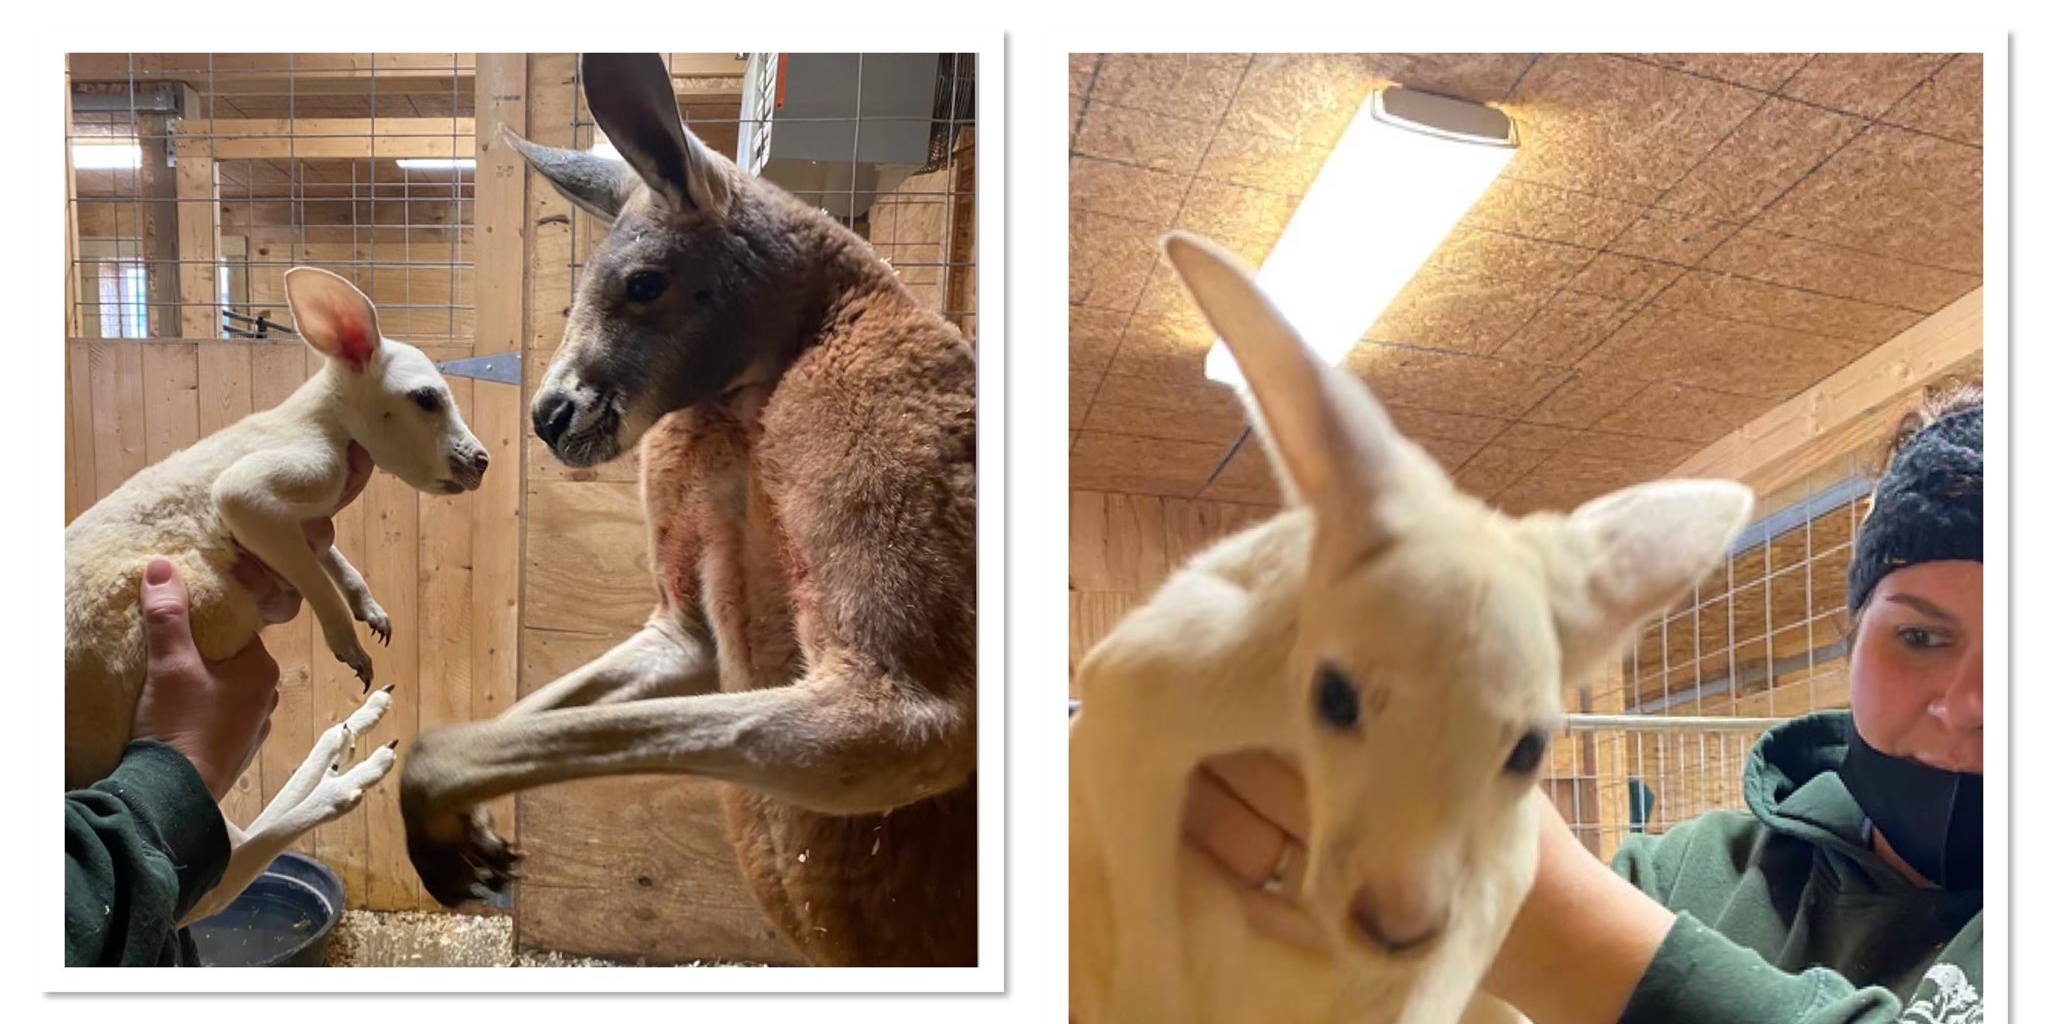 Image depicting rare white baby kangaroo or joey born in American zoo